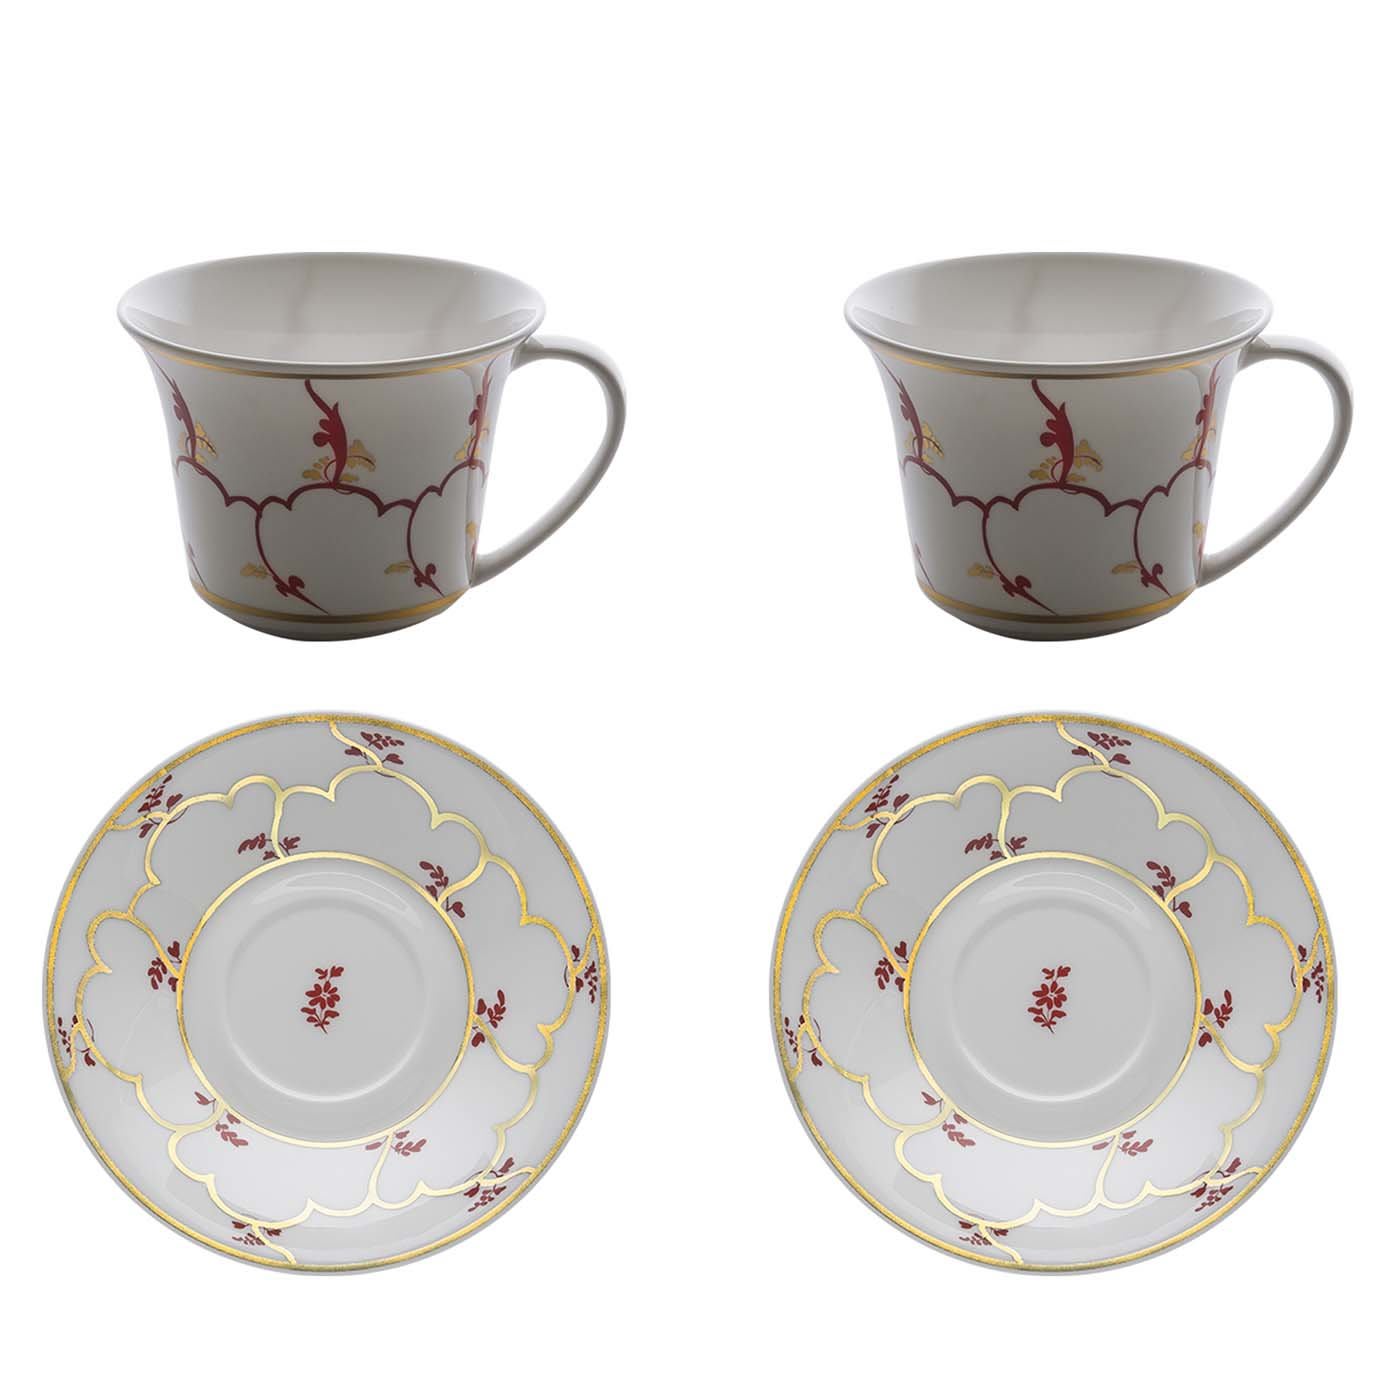 Feston E Cadena Set of 2 Tea Cups with Saucers - Geminiano Cozzi Venezia 1765